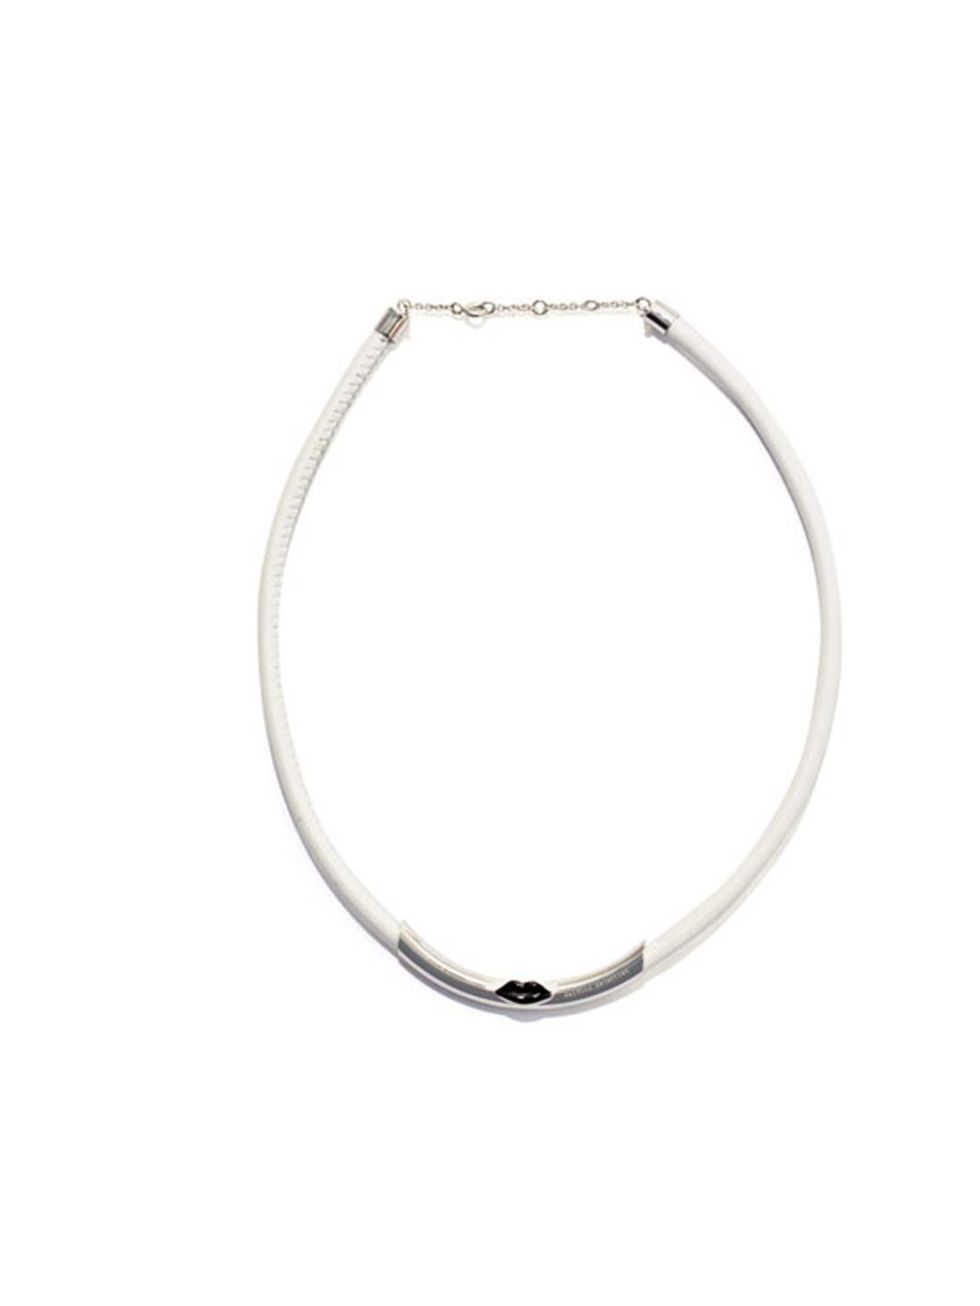 <p>Delfina Delettrez necklace, £185, at <a href="http://www.matchesfashion.com/product/136478">Matches</a></p>